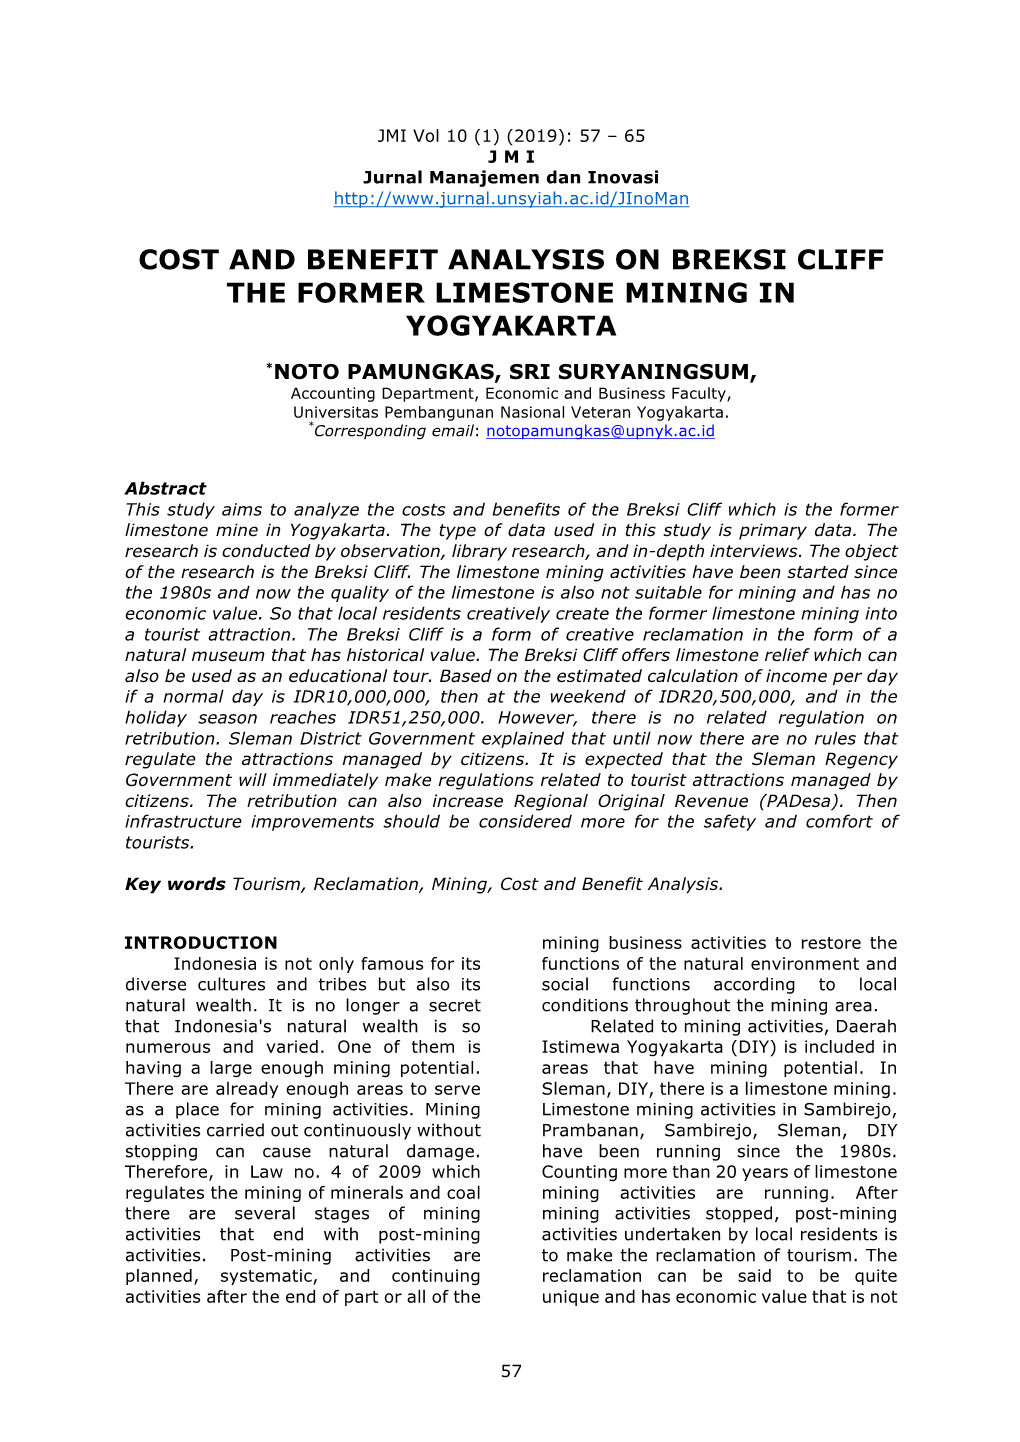 Cost and Benefit Analysis on Breksi Cliff the Former Limestone Mining in Yogyakarta